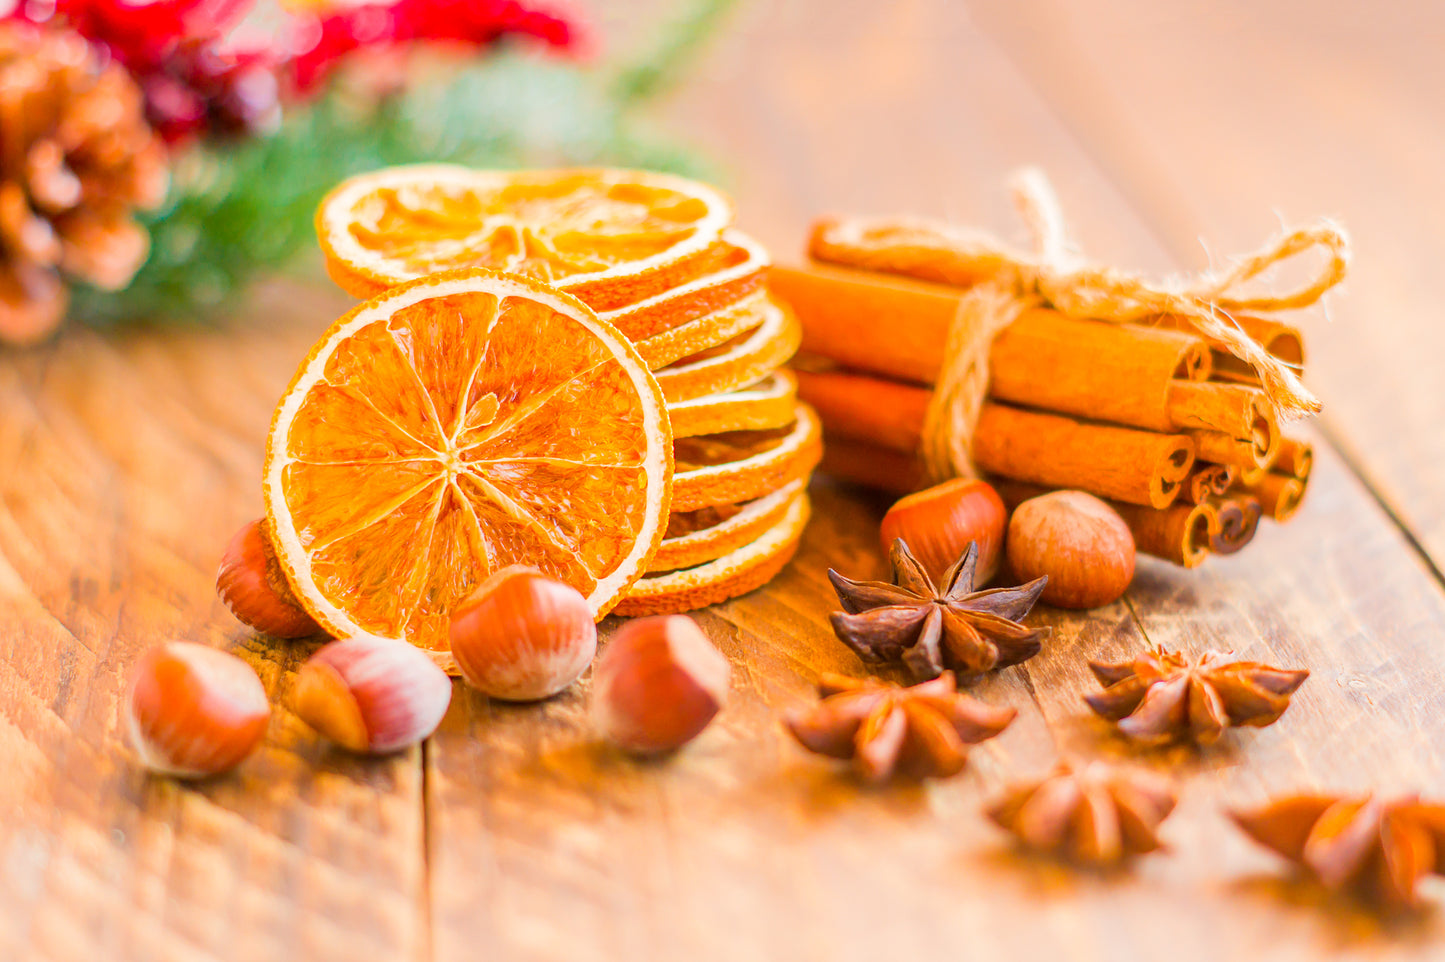 Love the Lakes Cinnamon & Orange Reed Diffuser Refill 200ml - Spicy Citrus with Warm Cinnamon & Cloves